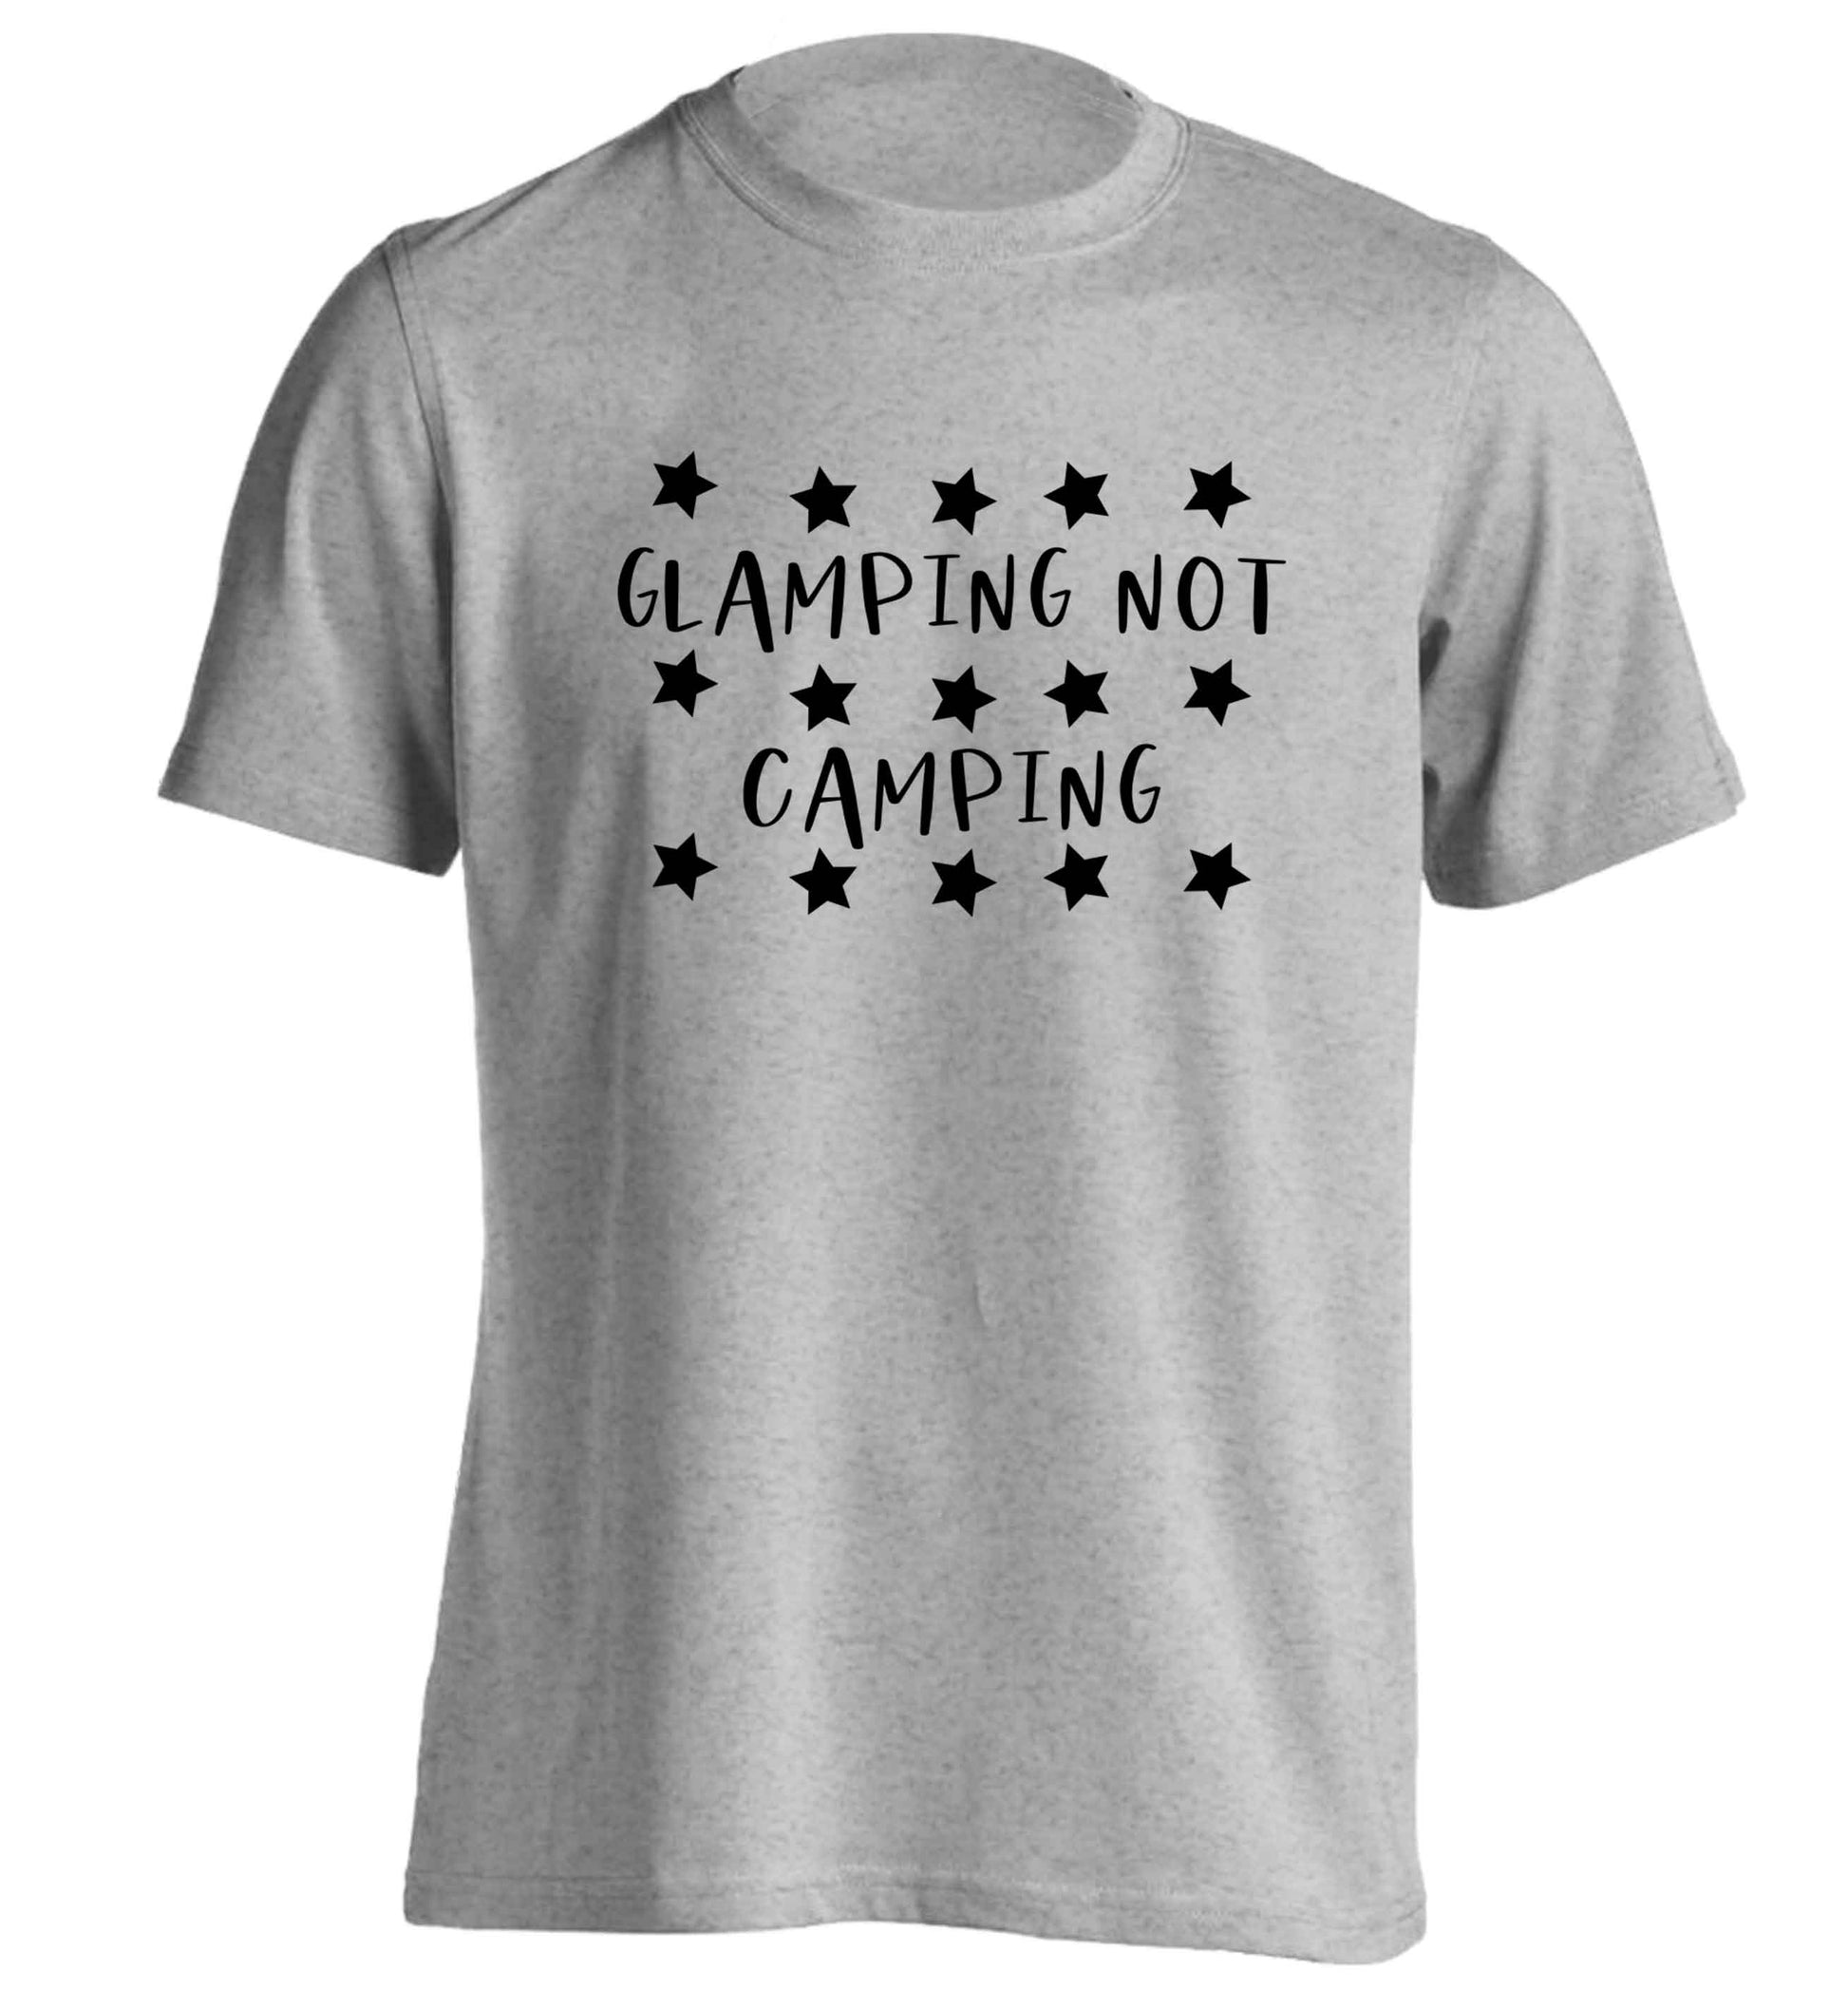 Glamping not camping adults unisex grey Tshirt 2XL